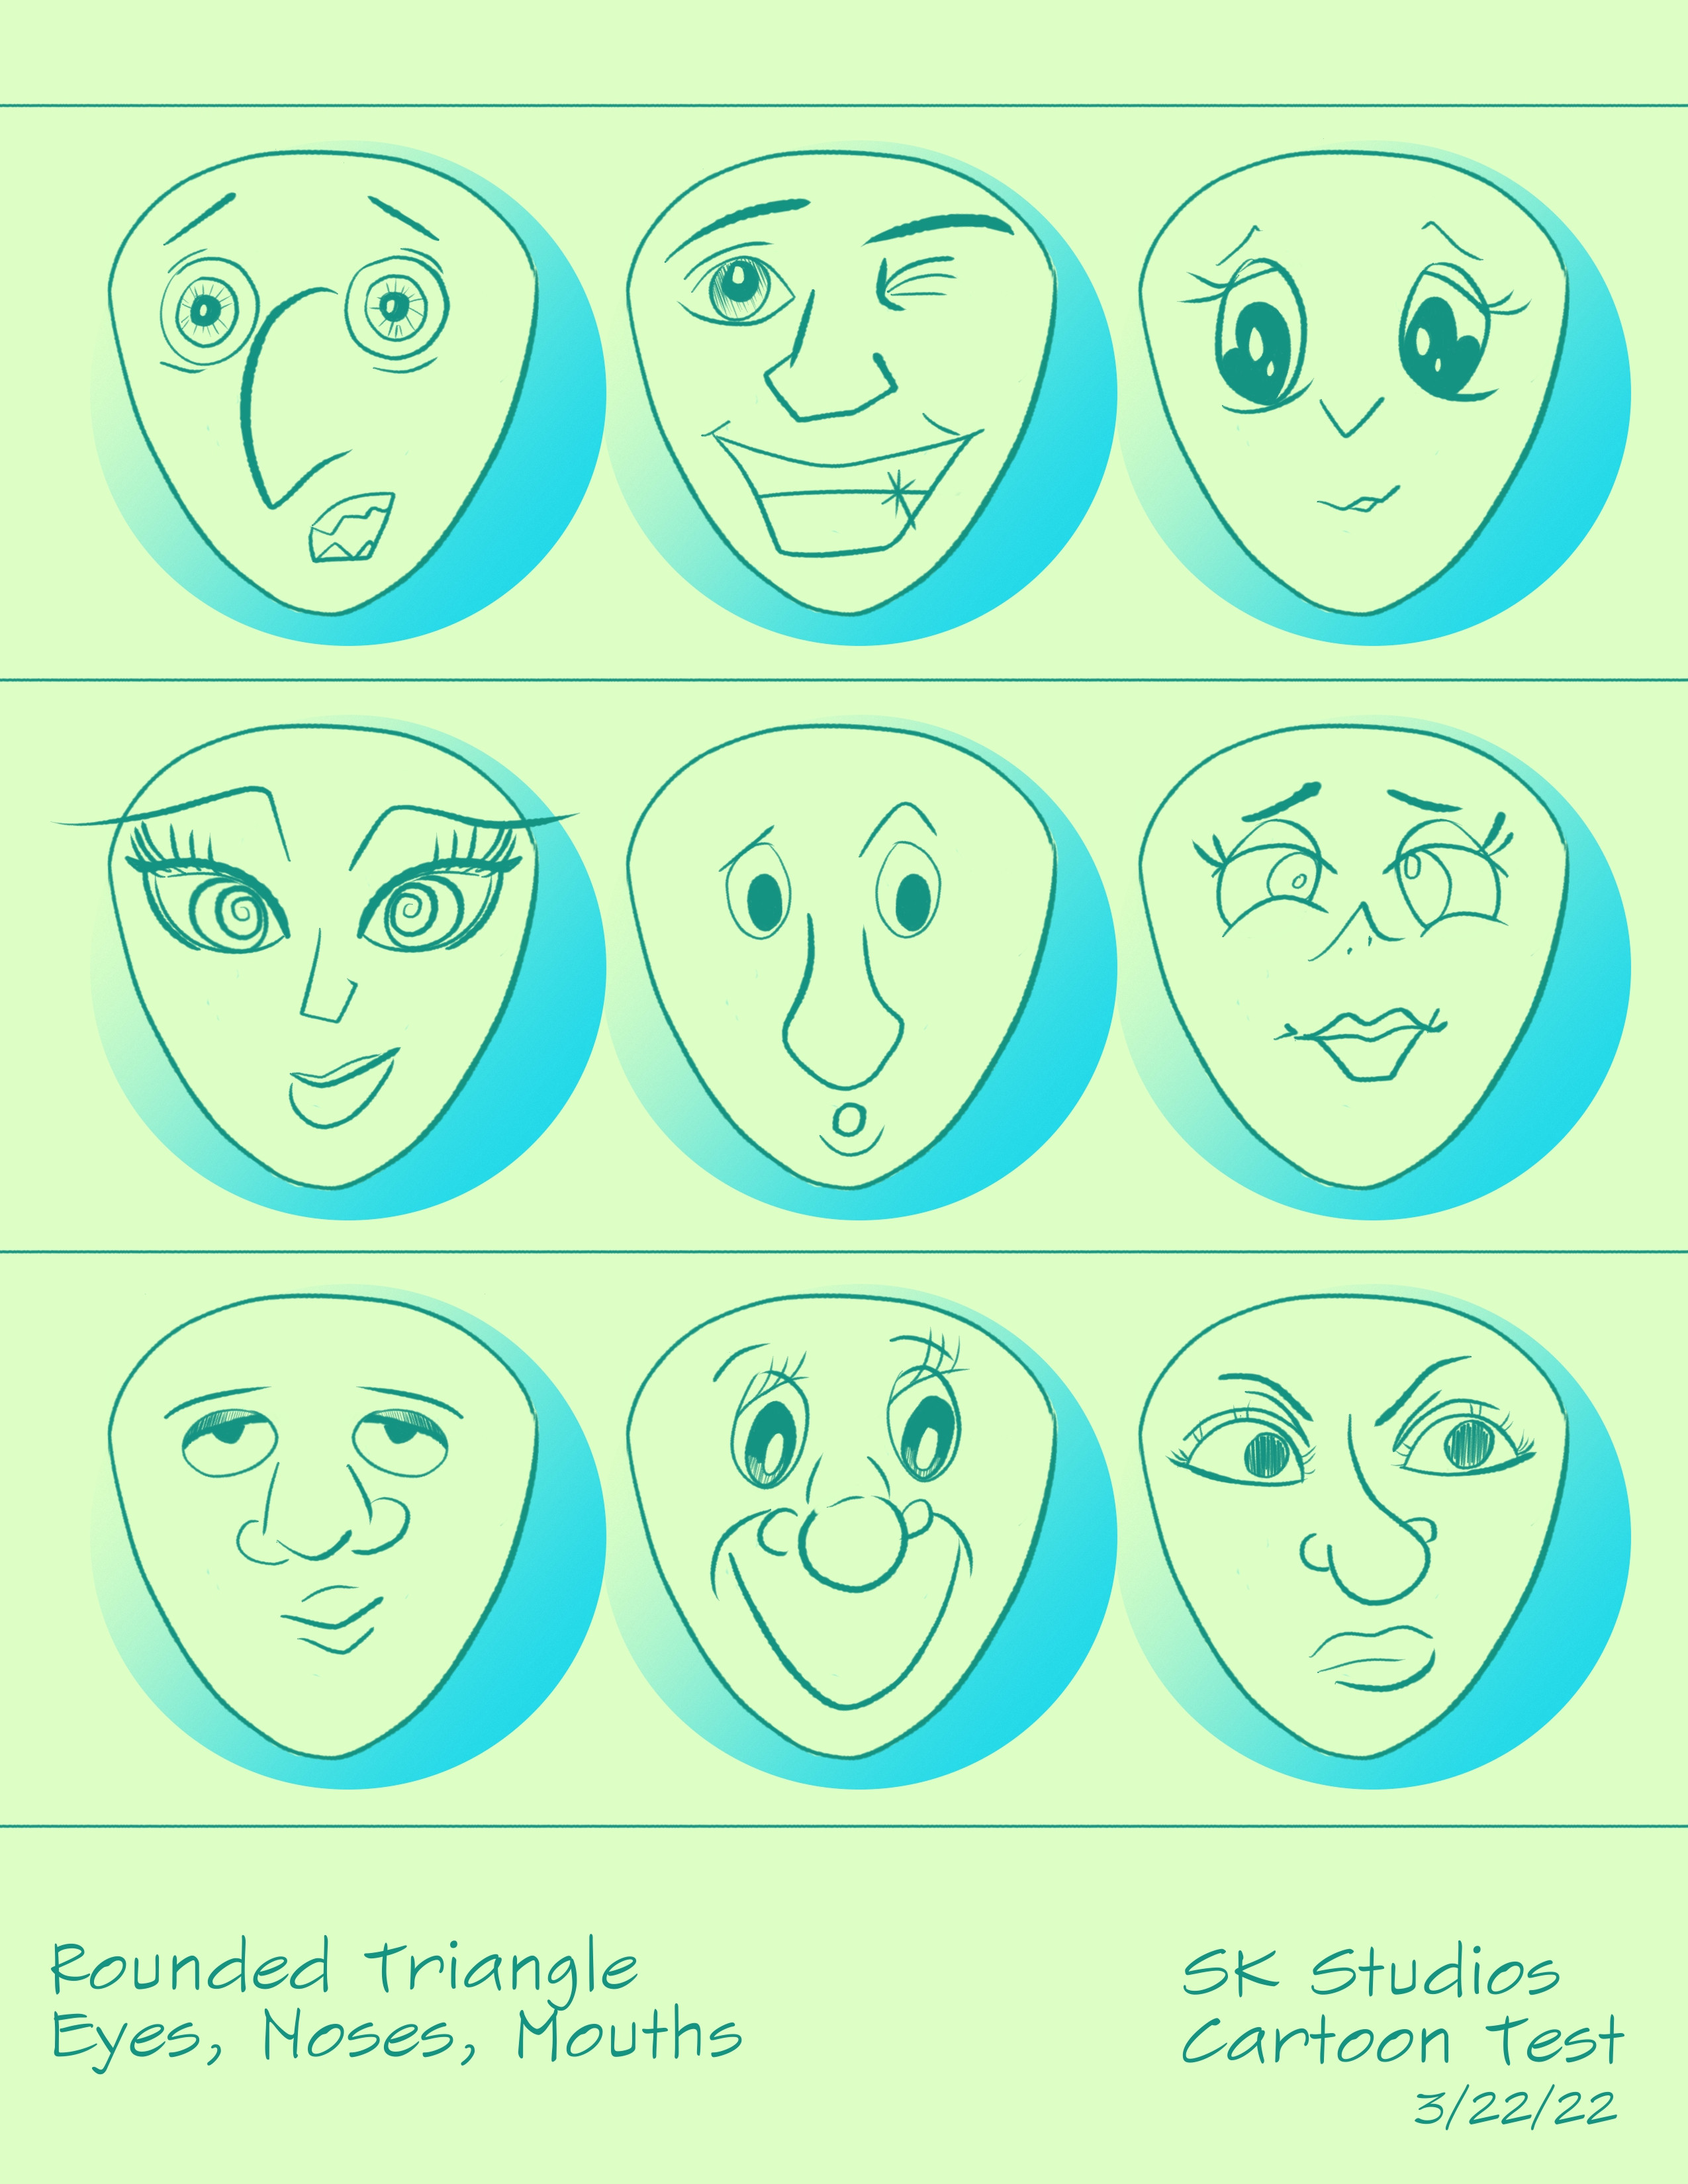 ArtStation - Cartoon Test Faces, Rounded Triangle Shape | Digital Art